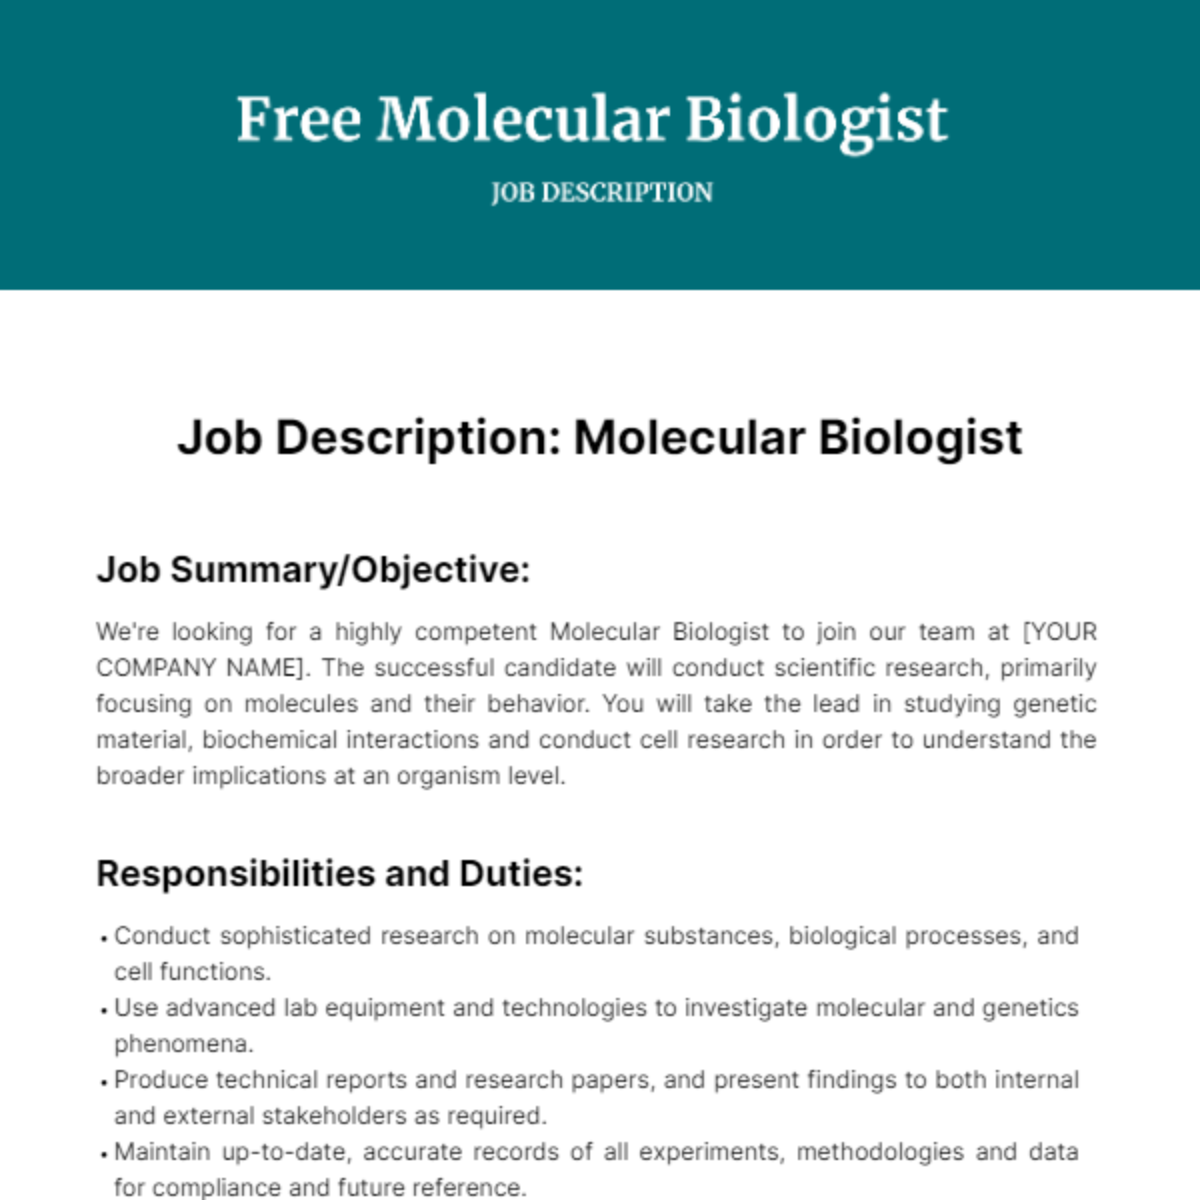 Free Molecular Biologist Job Description Template